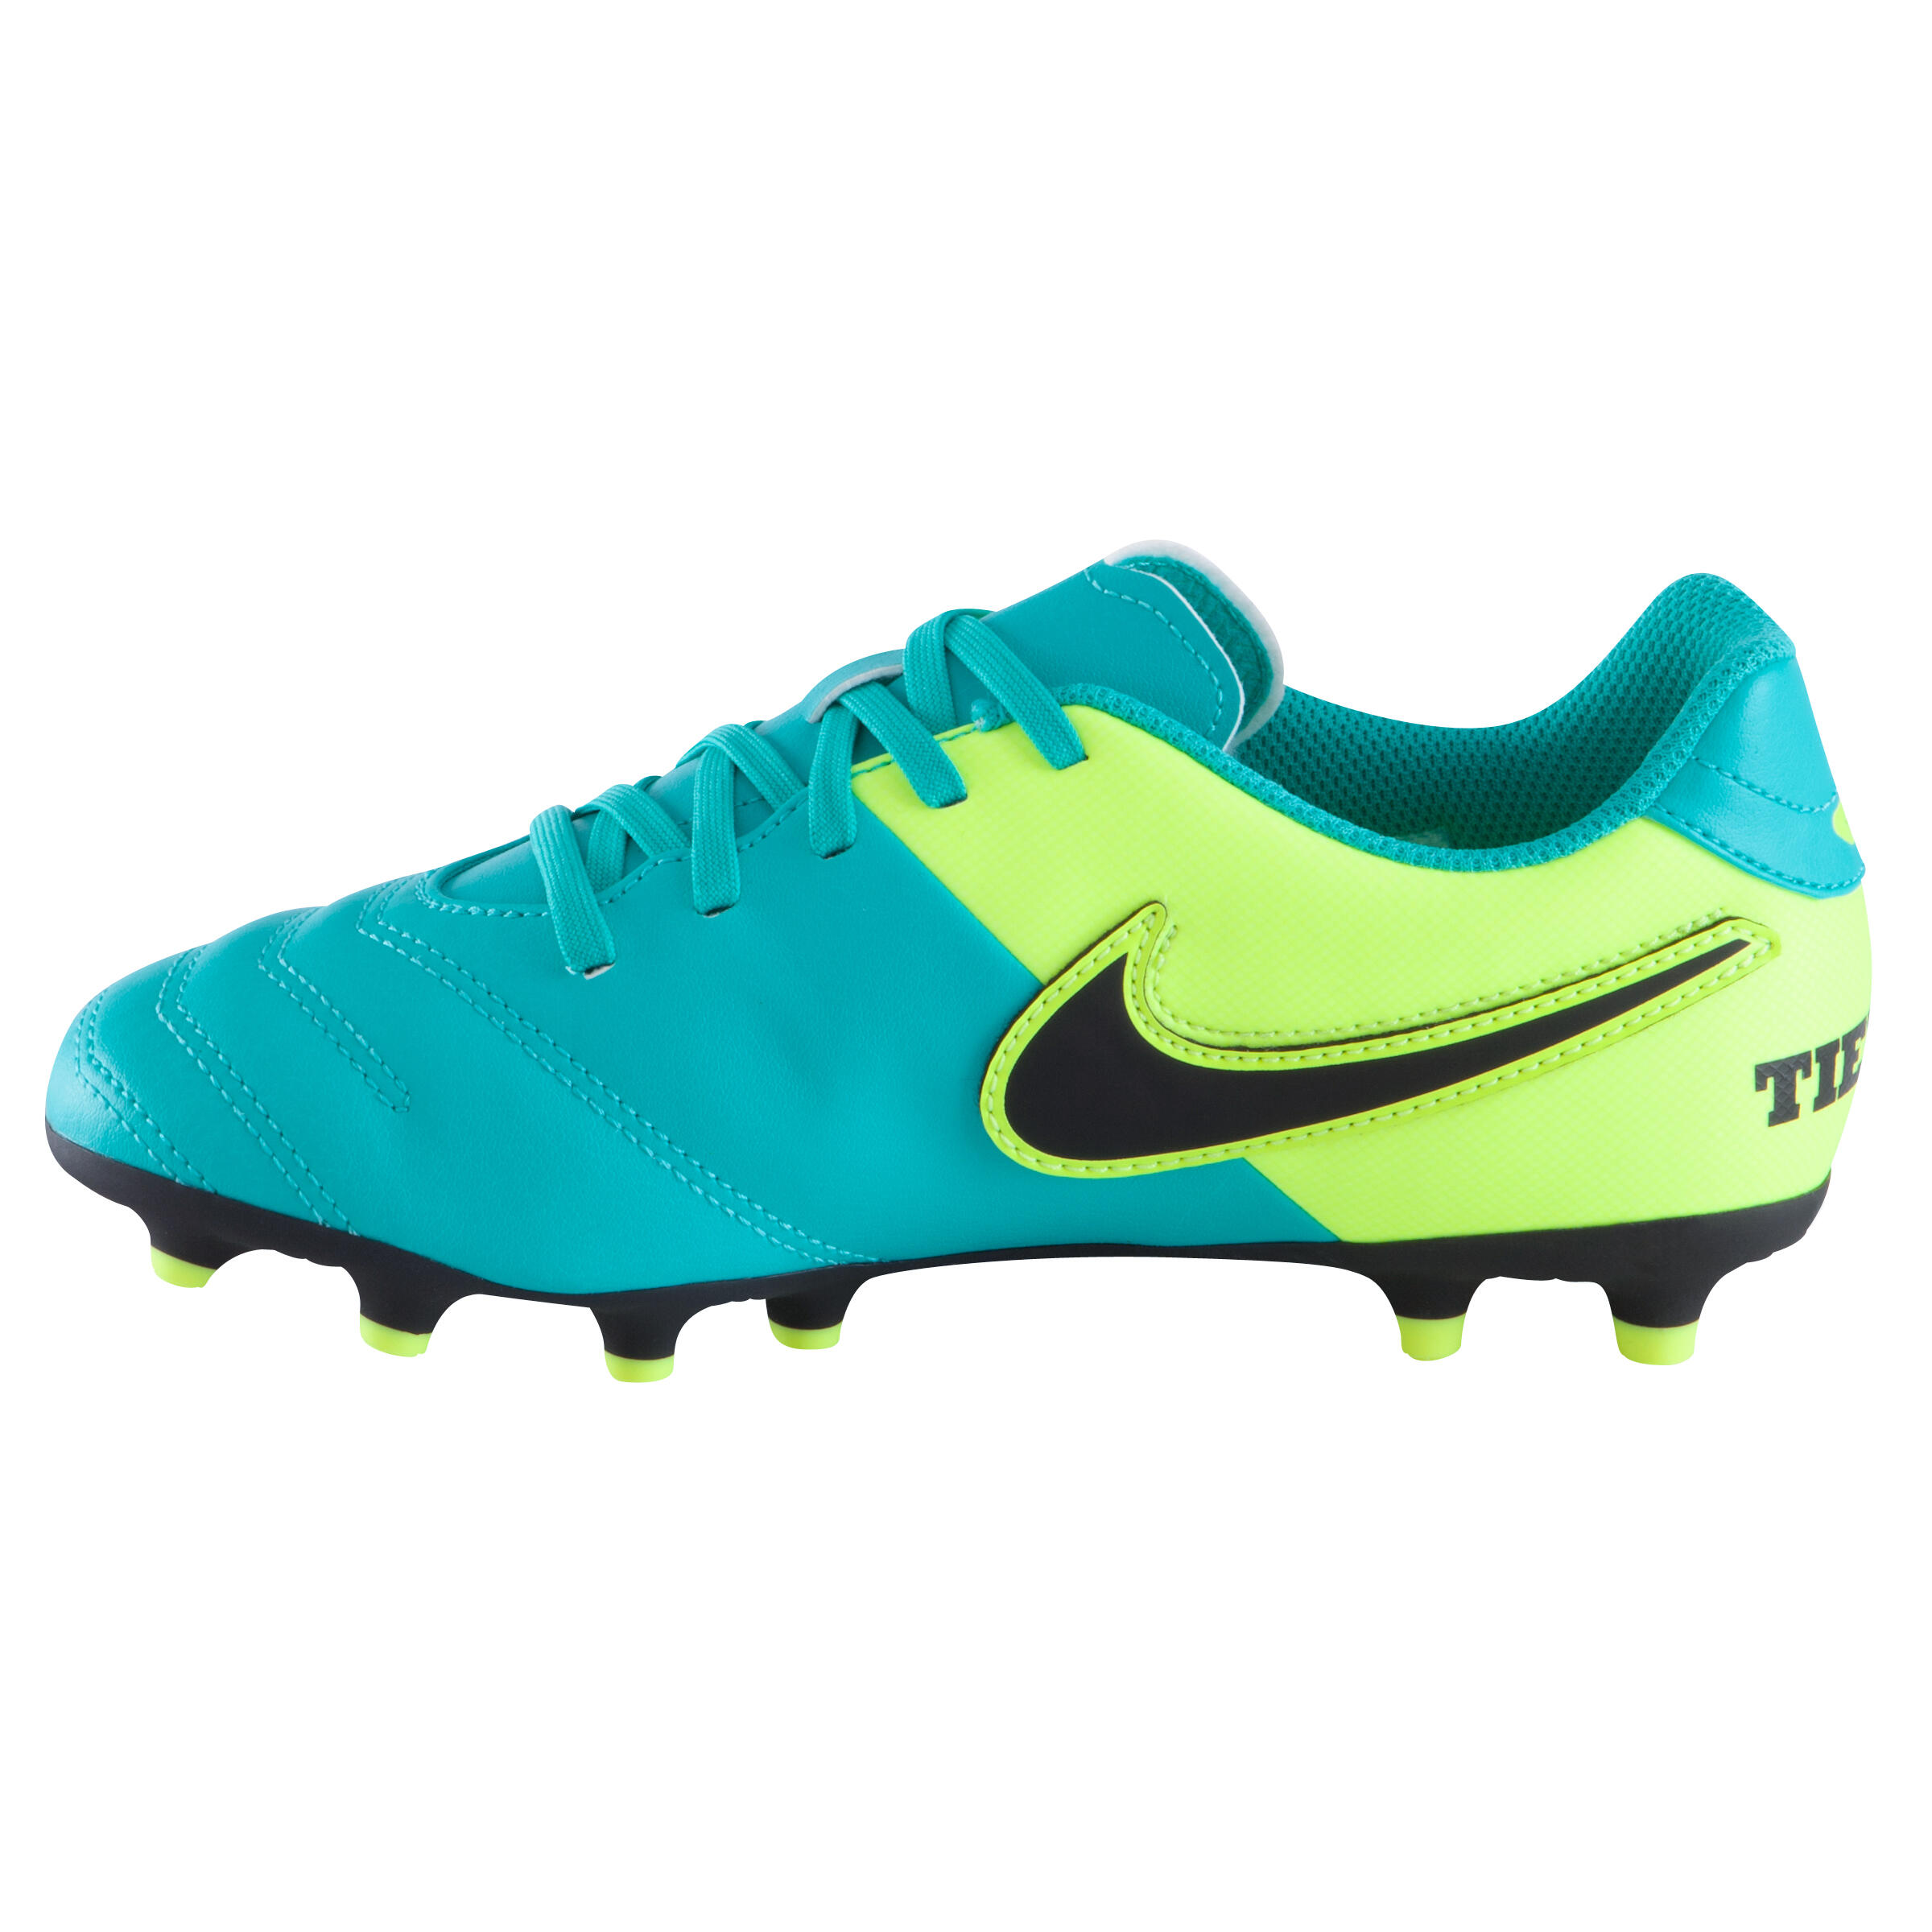 Tiempo Rio FG Junior Football Boots - Green 3/14